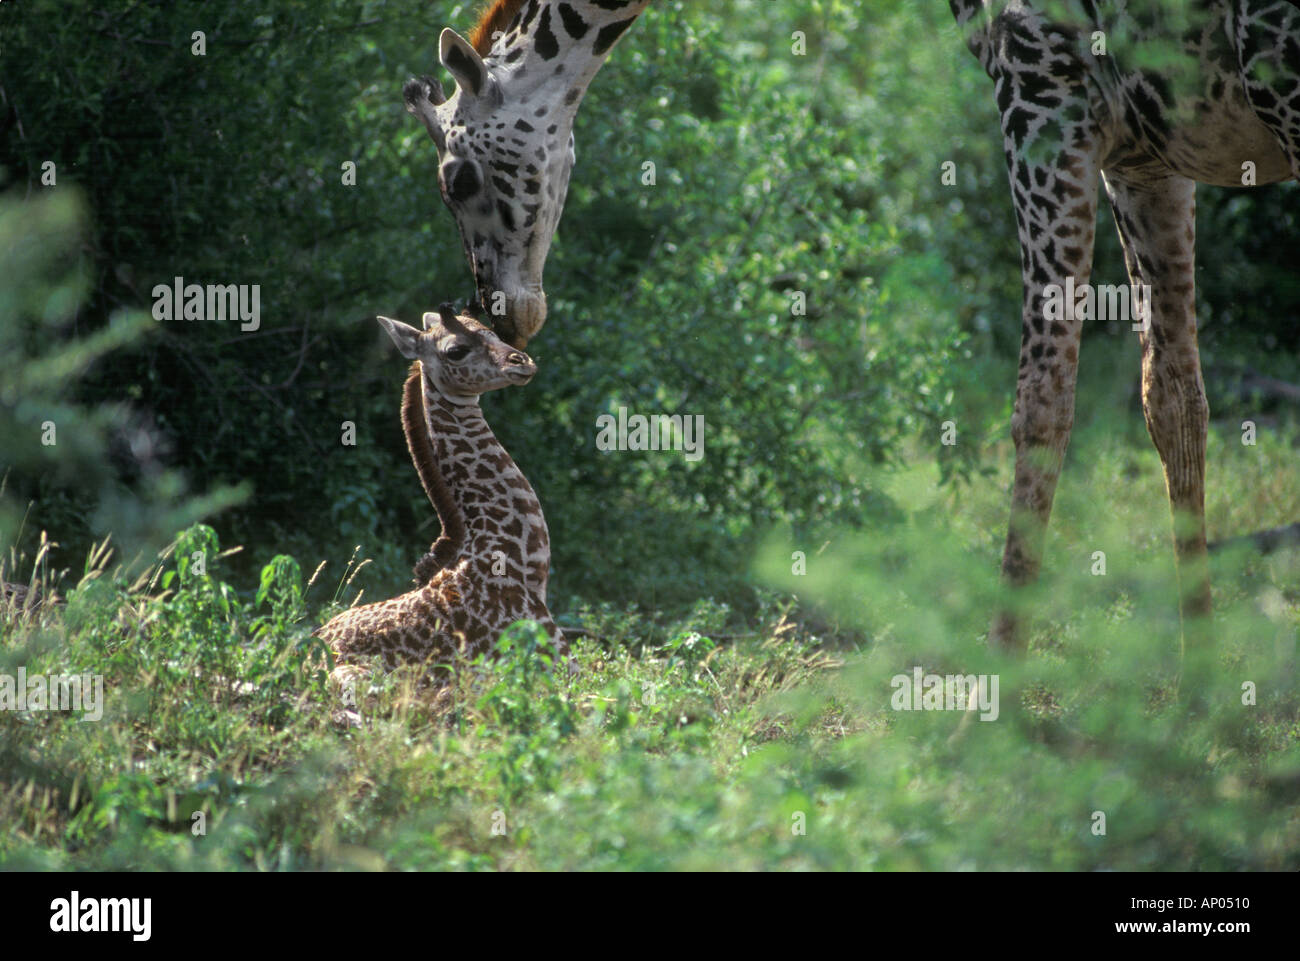 A newborn MAASAI GIRAFFE Giraffa Camelopardalis is so young it has not yet stood up TANZANIA LAKE MANYARA NATIONAL PARK Stock Photo